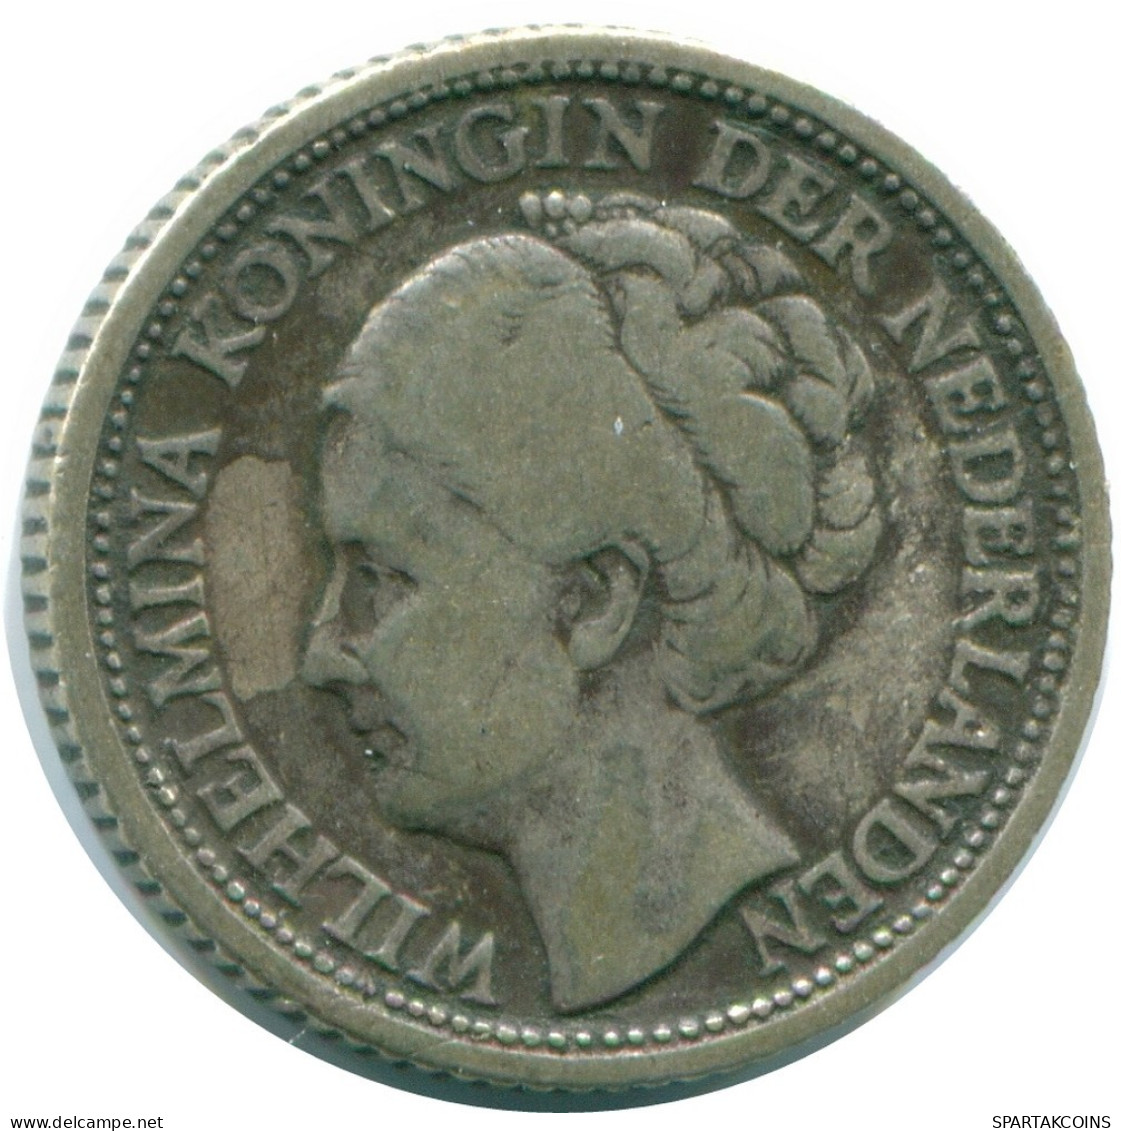 1/4 GULDEN 1944 CURACAO Netherlands SILVER Colonial Coin #NL10594.4.U.A - Curacao